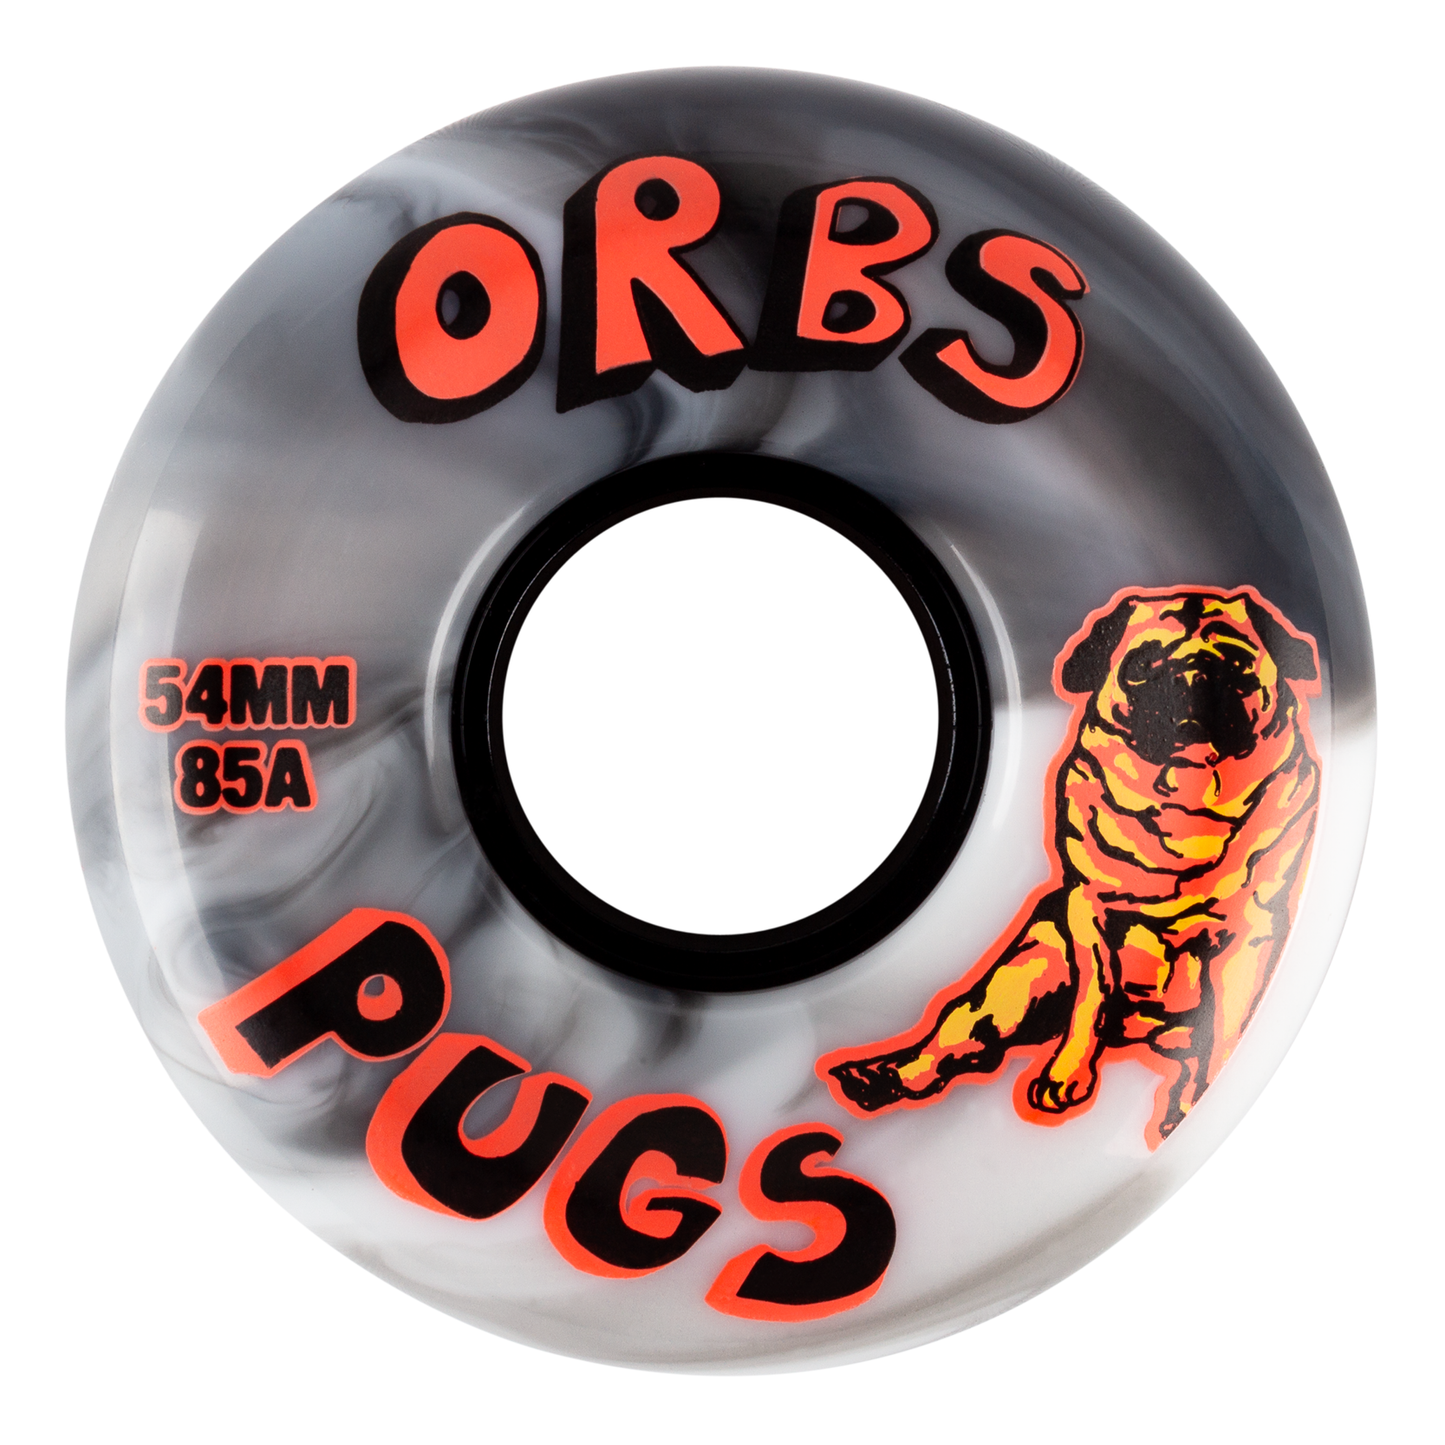 ORBS Pugs Swirl Wheels 54mm - Black/White